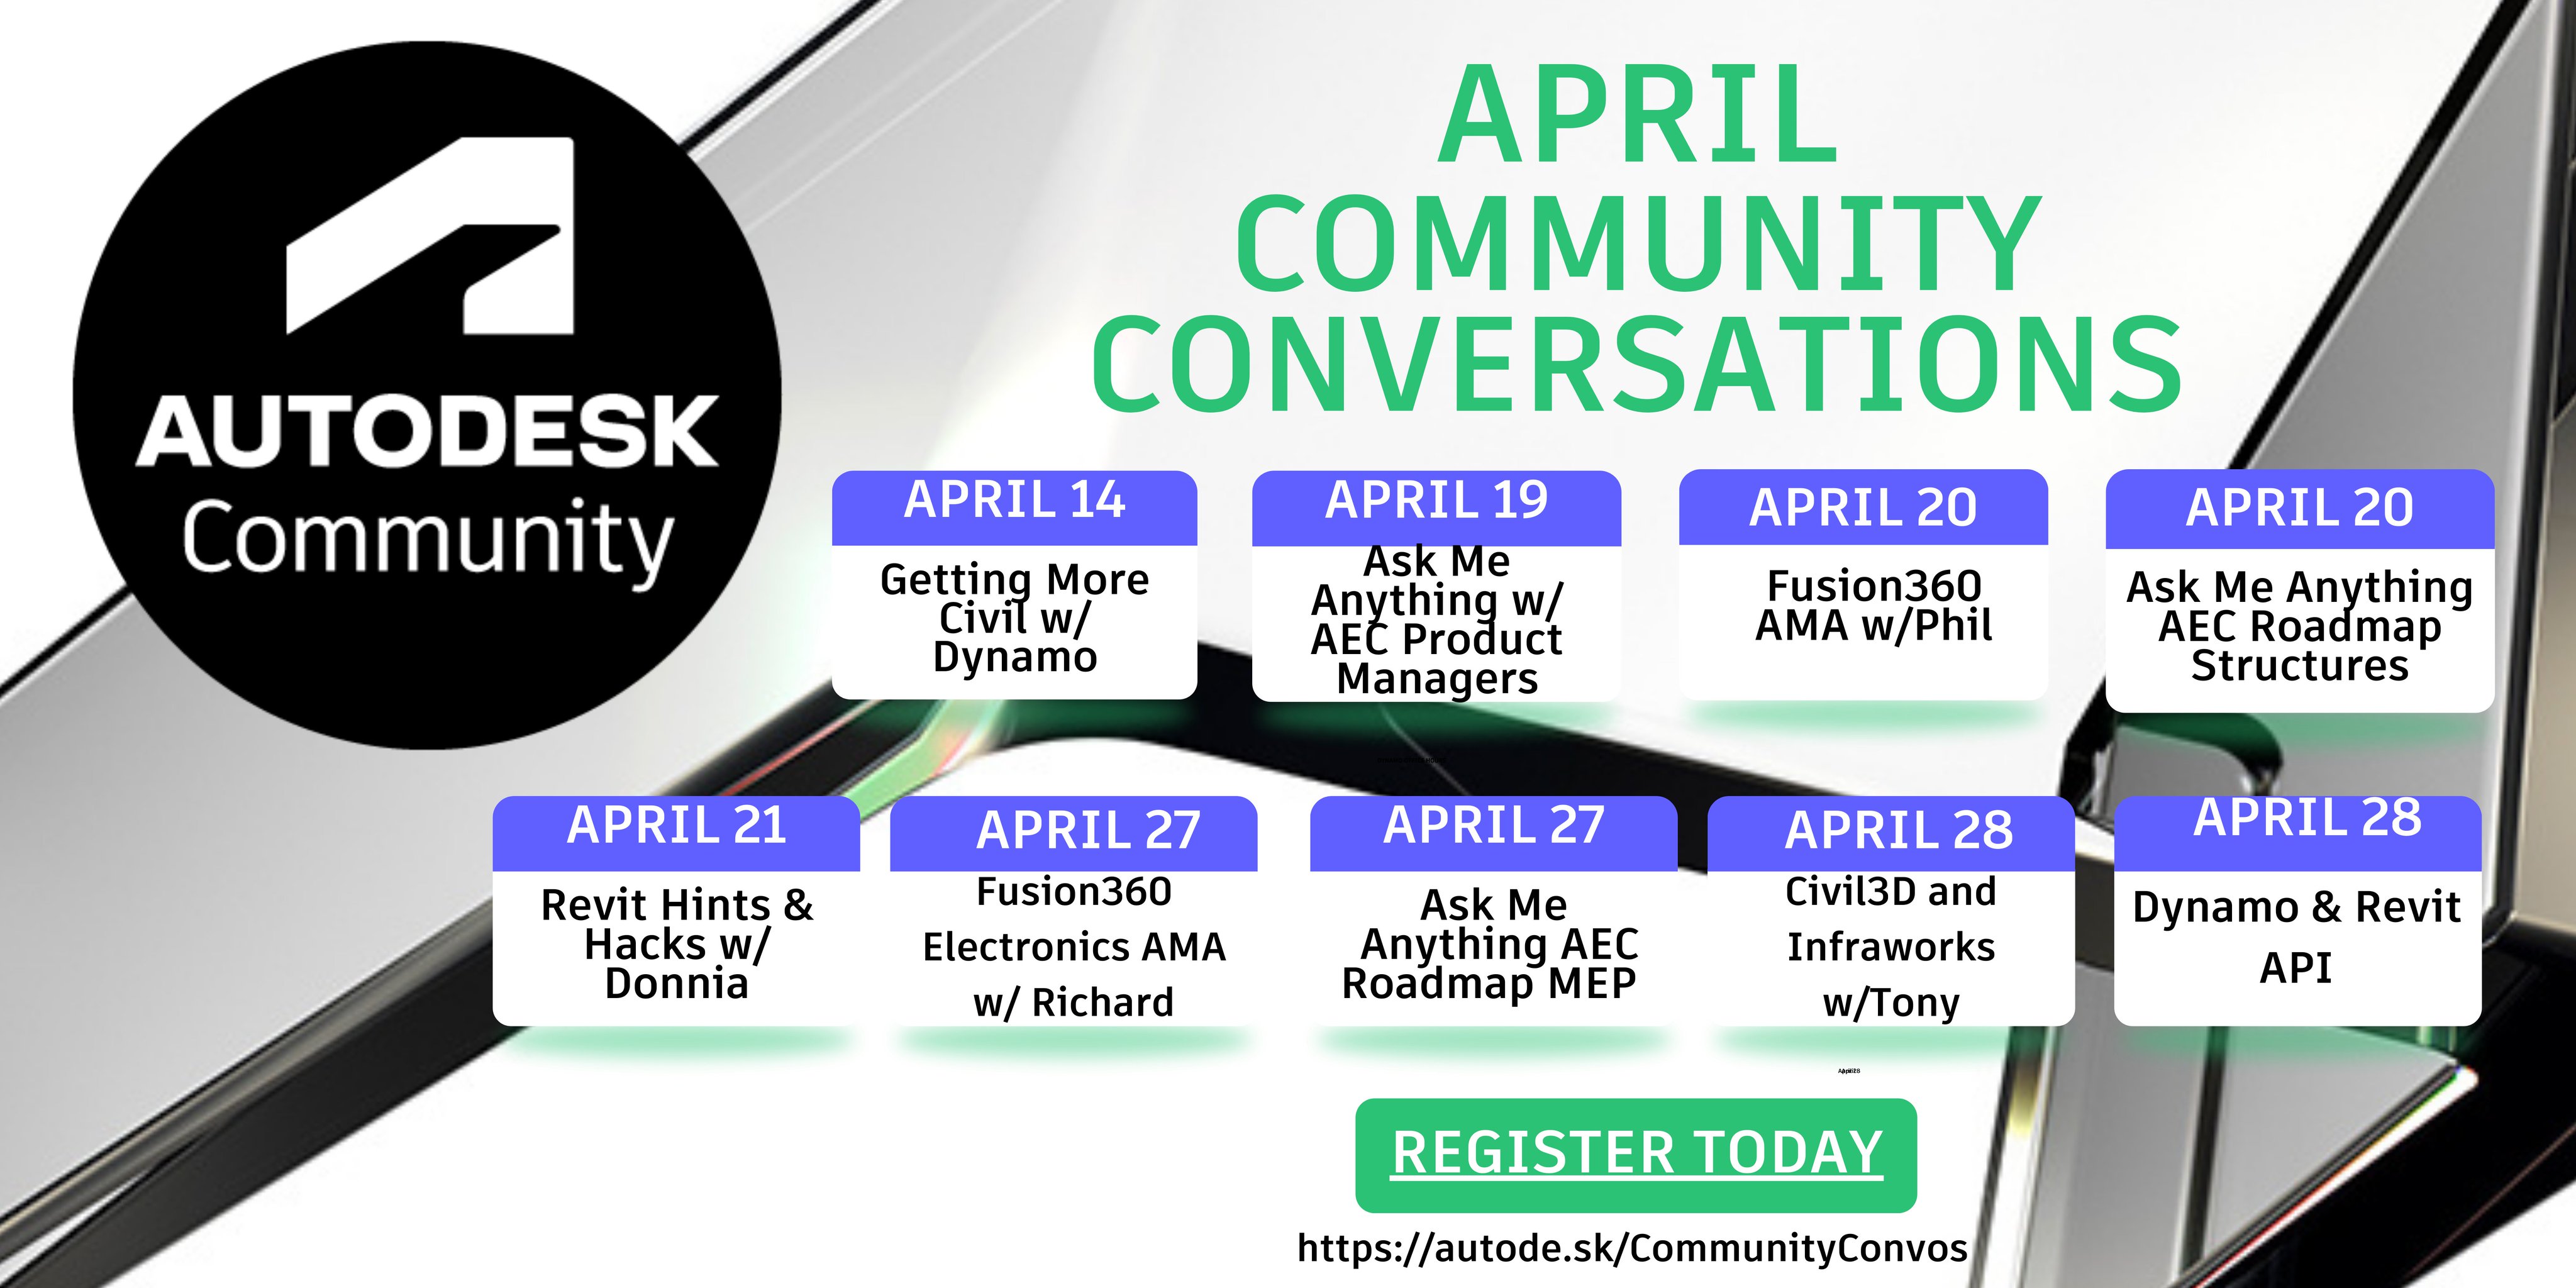 Autodesk Community Conversations http://autode.sk/CommunityConvos 